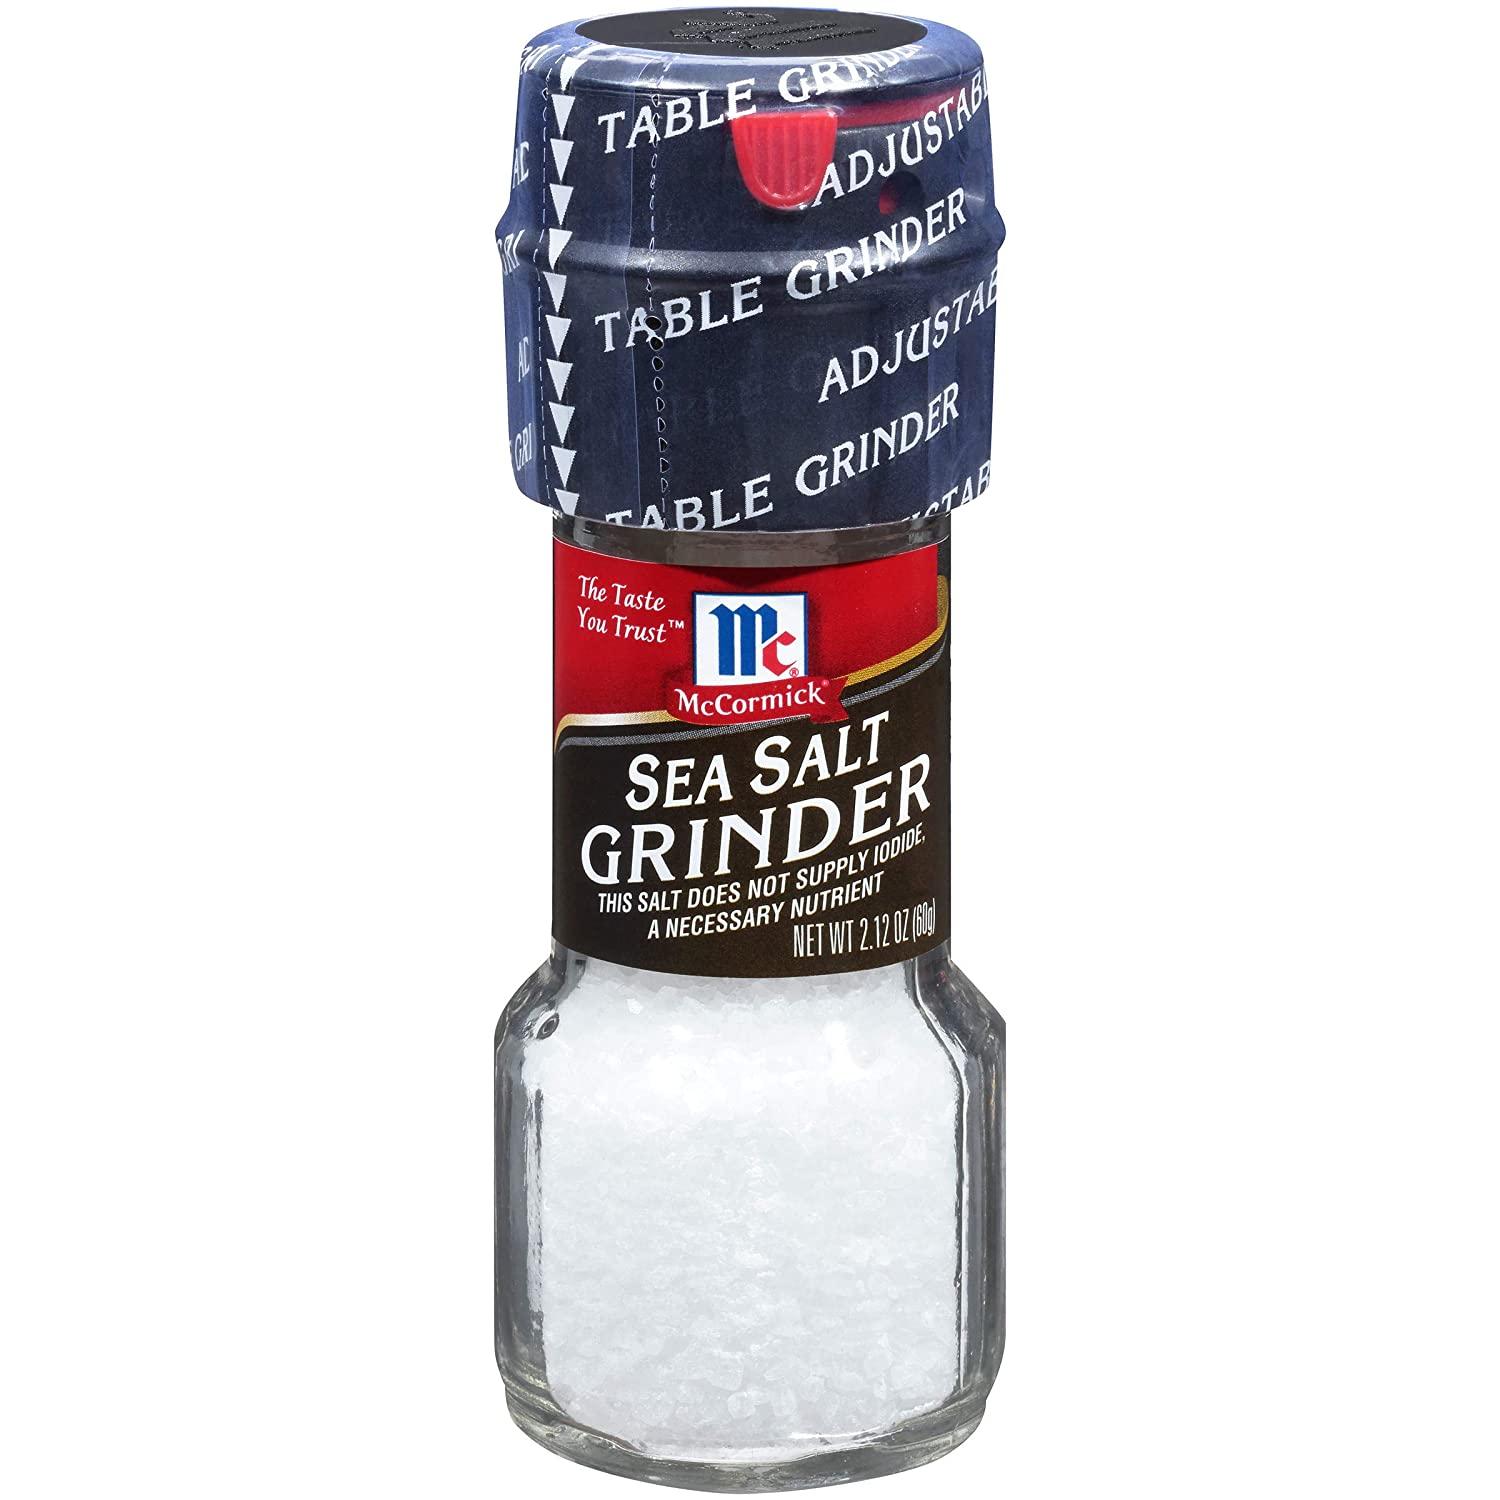 McCormick Sea Salt Grinder for $1.45 Shipped